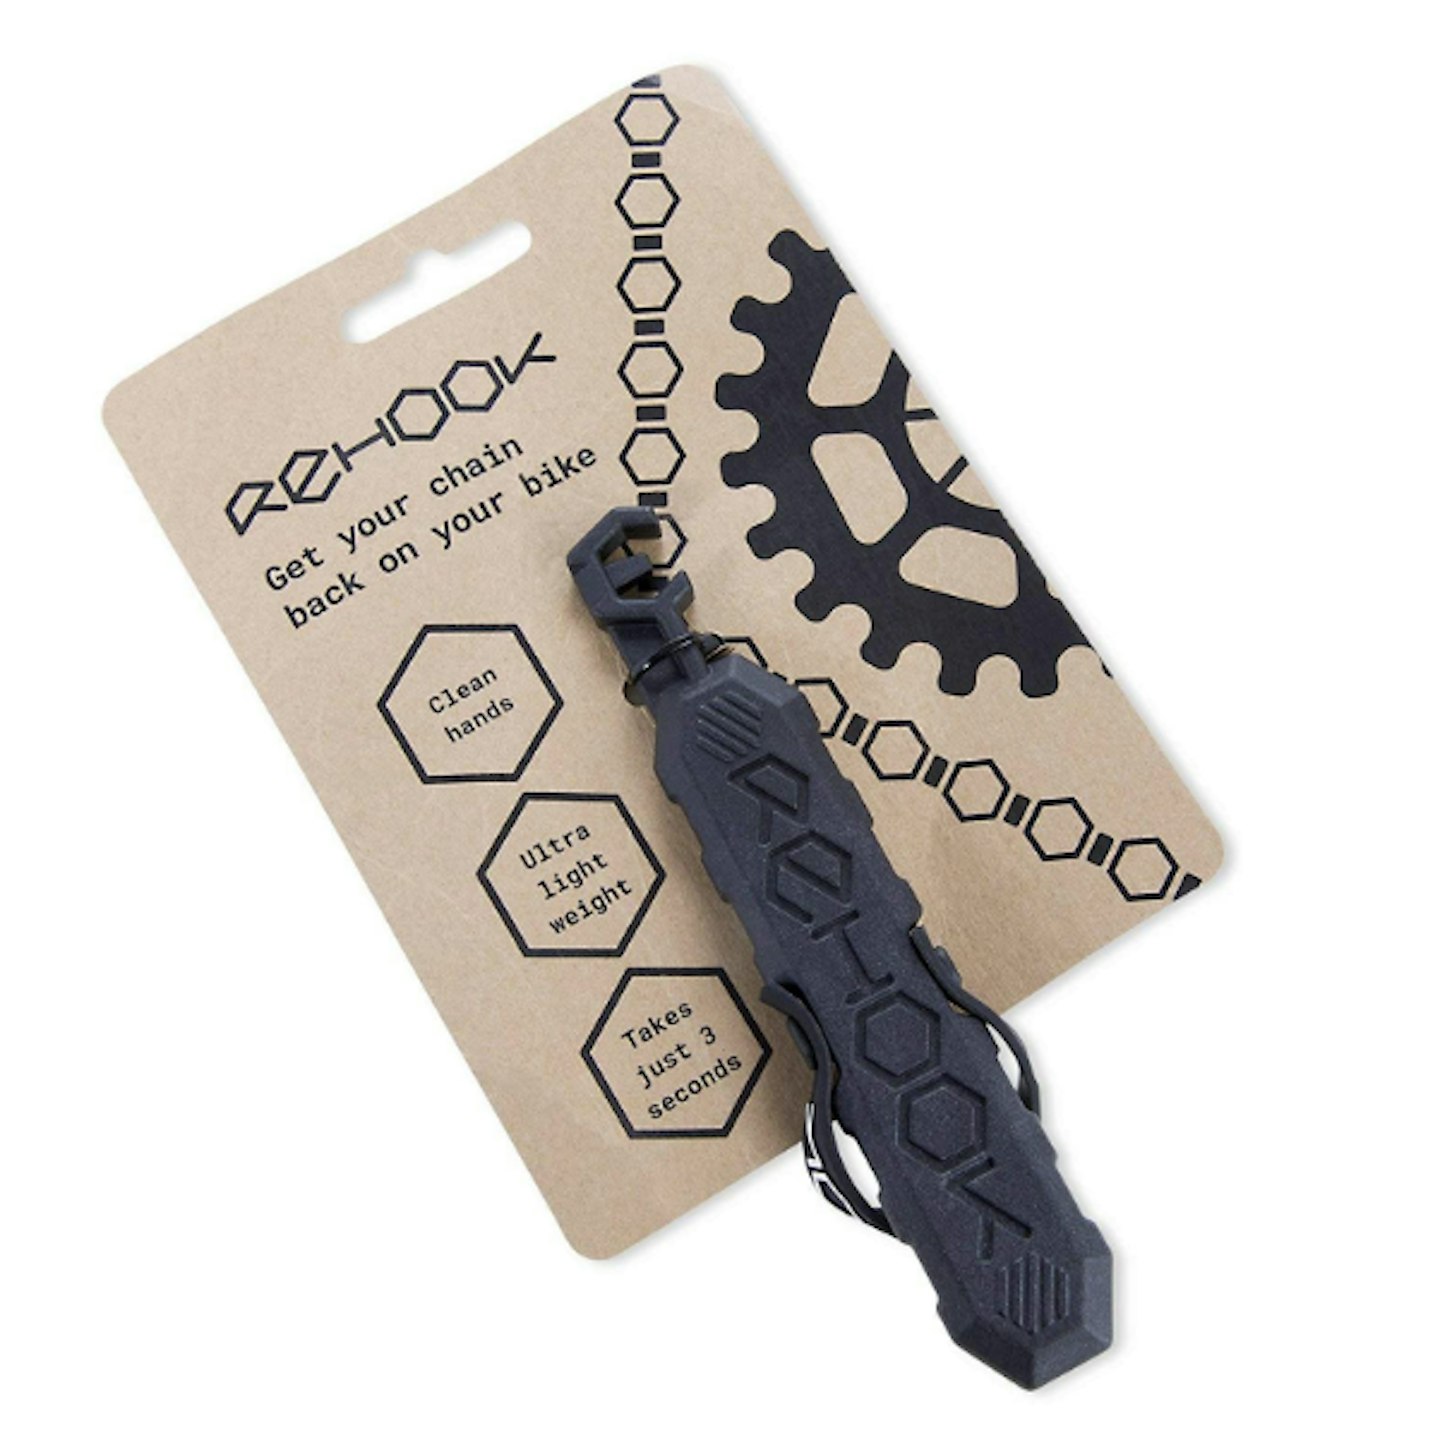 Rehook Chain Tool